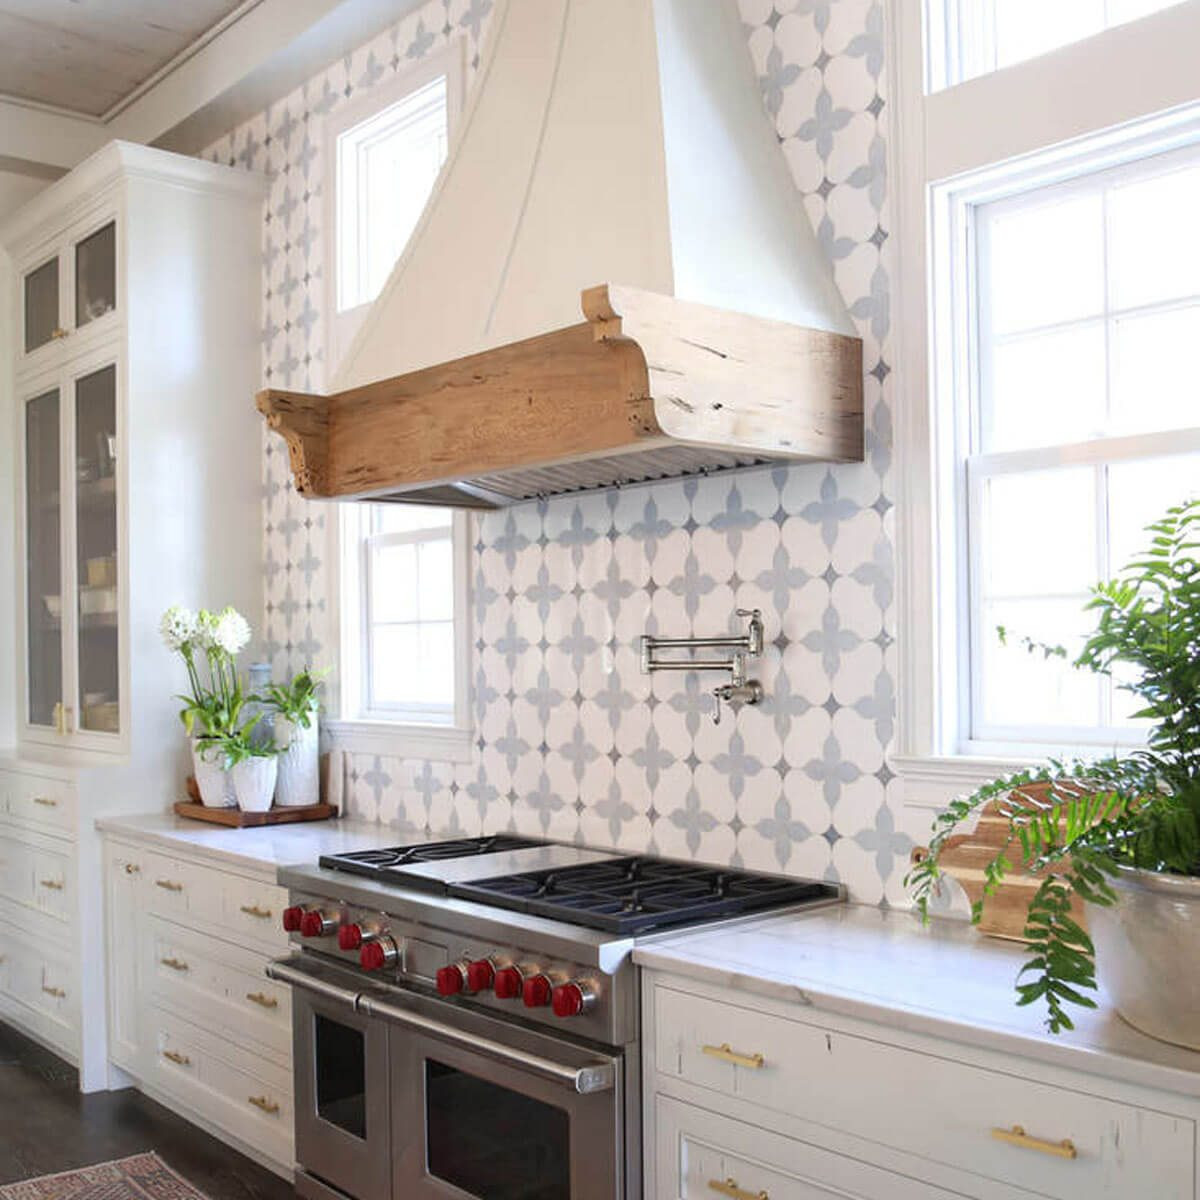 Kitchen Backsplash Tiles Designs Best Of 14 Showstopping Tile Backsplash Ideas to Suit Any Style